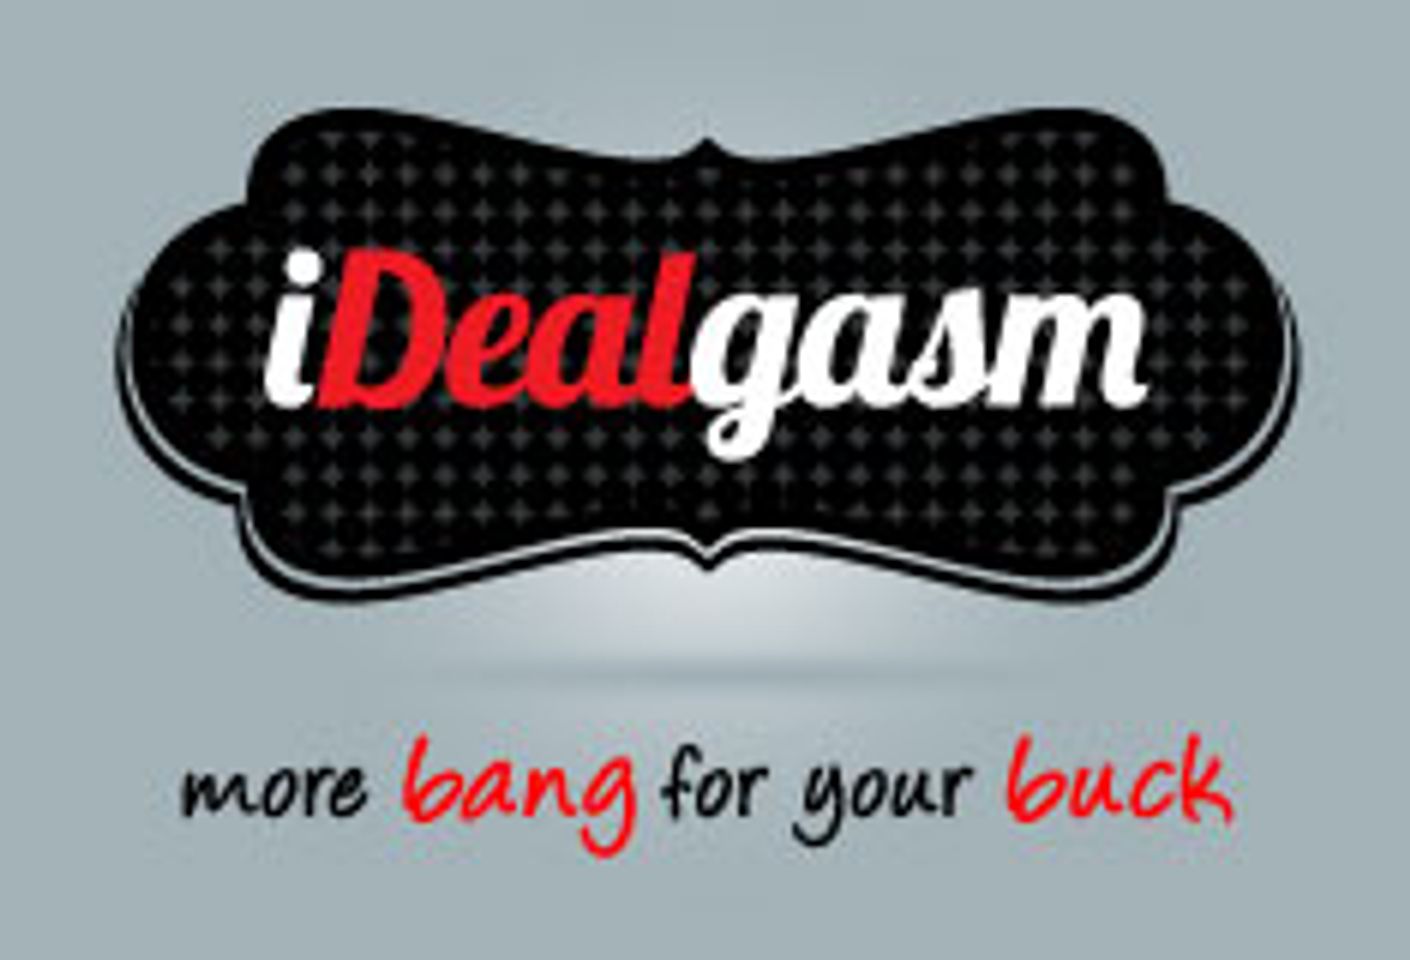 iDealgasm Expands Adult Entertainment Discount Offerings